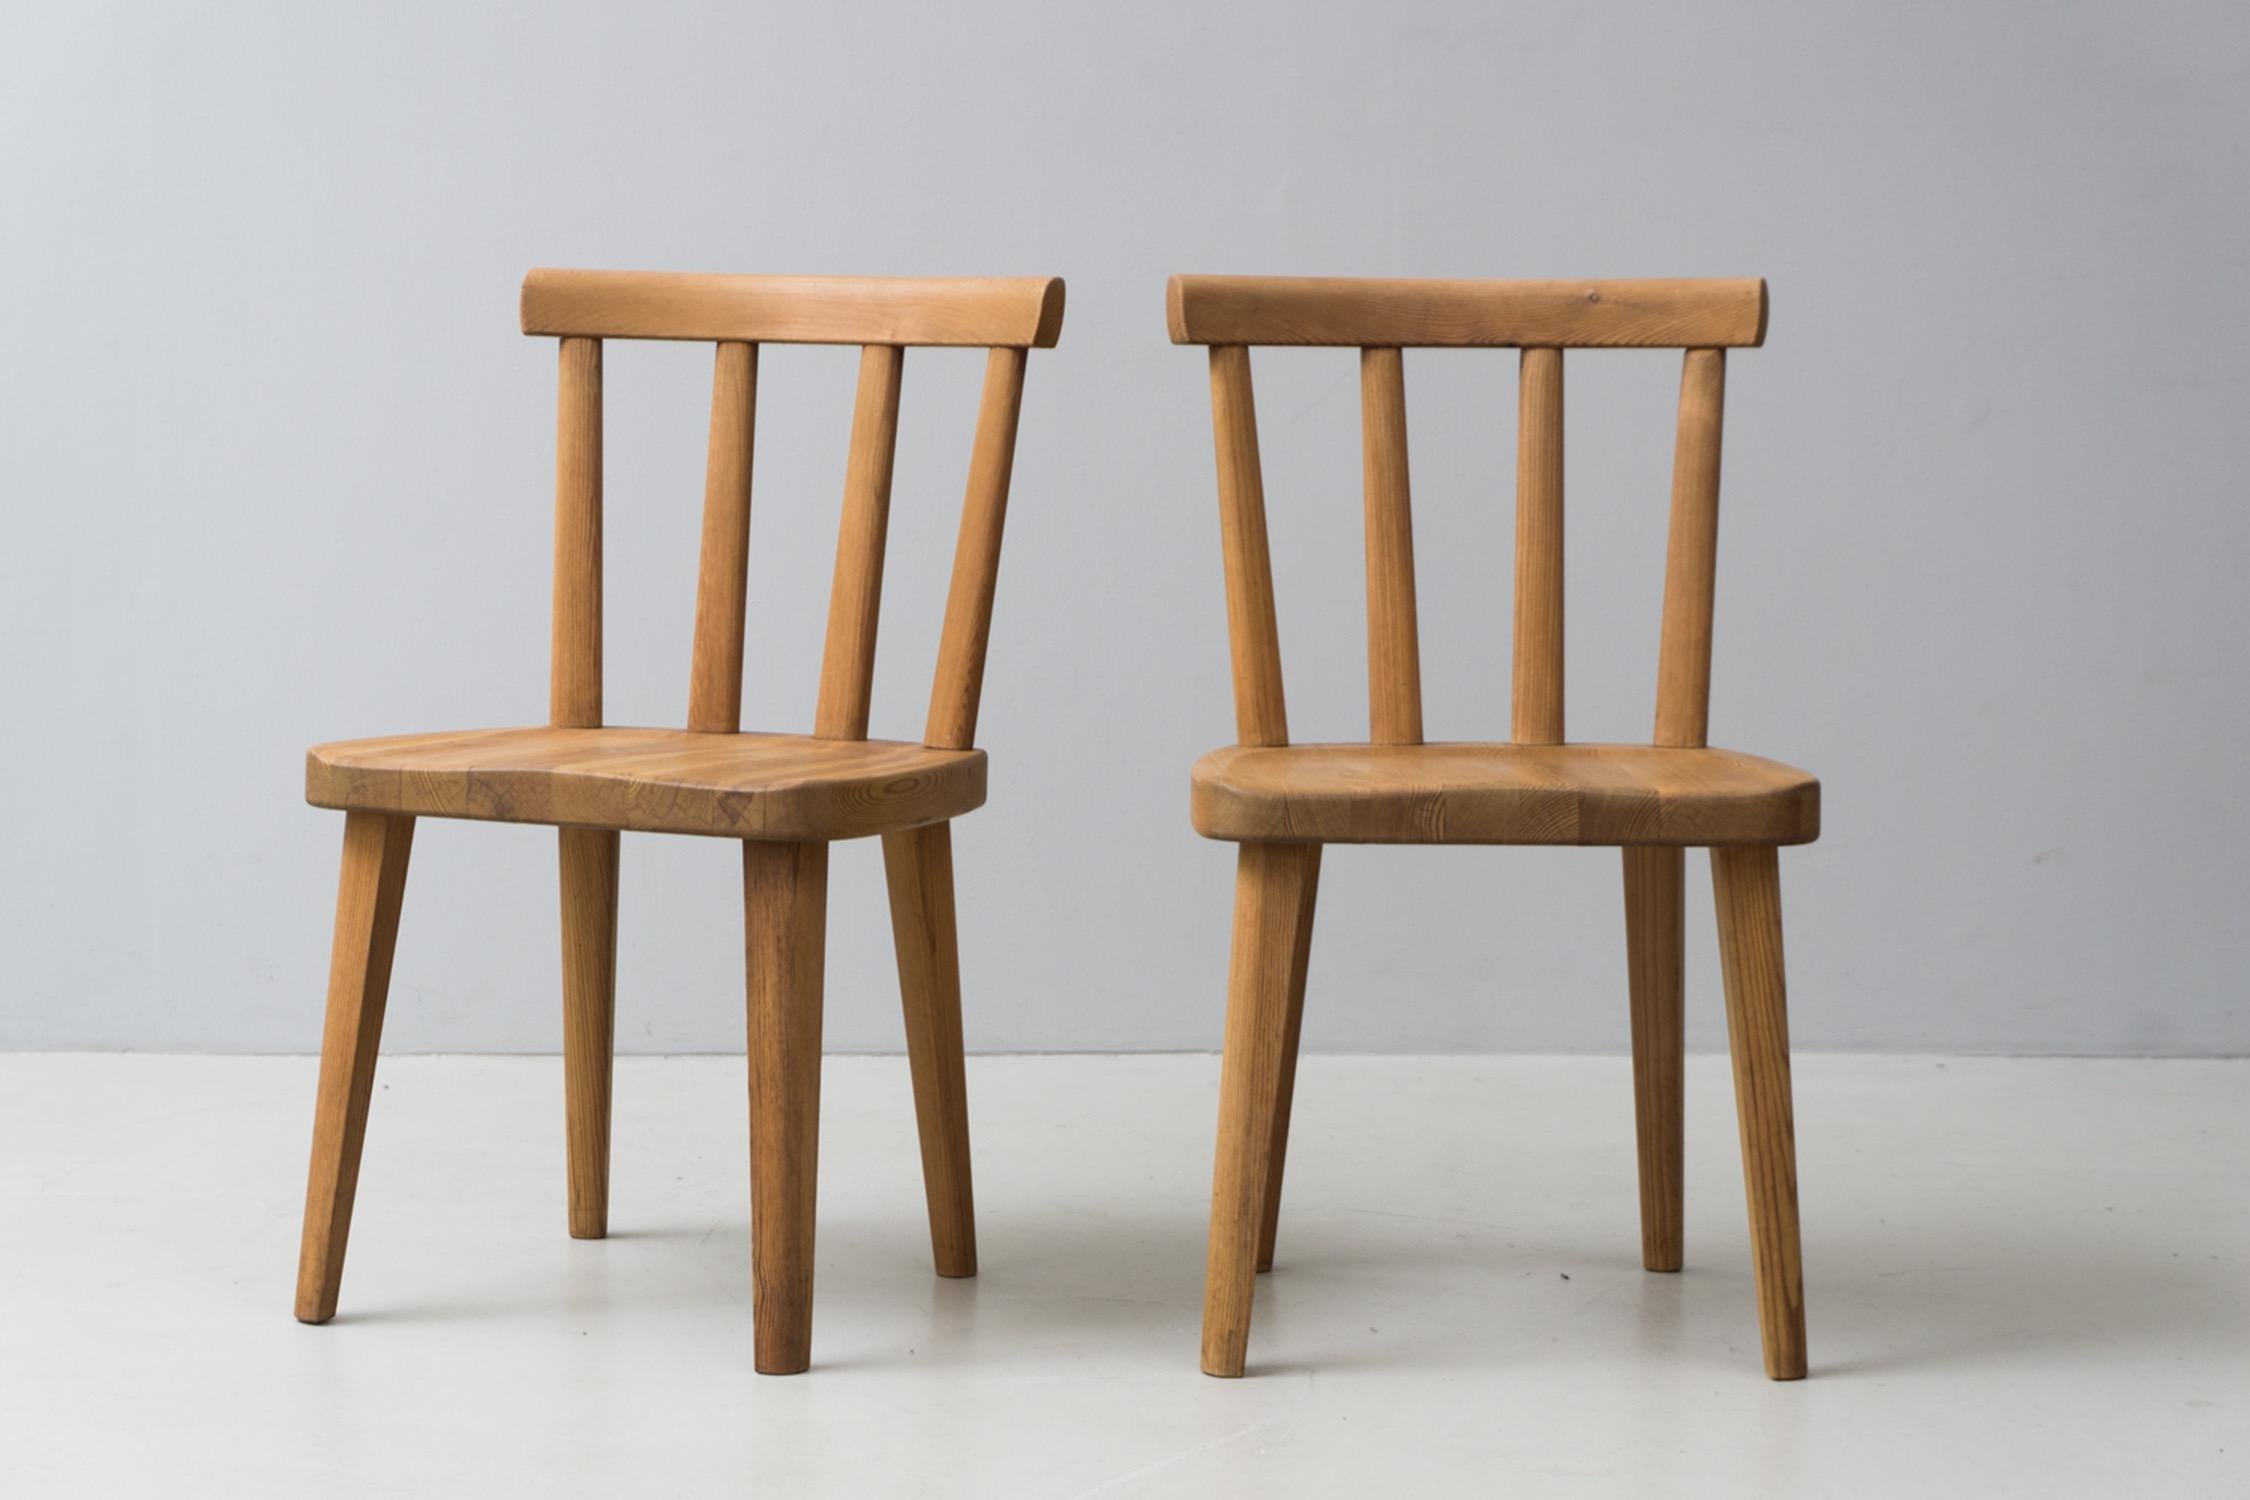 Italian 8 'Uto' Chairs by Axel Einar Hjorth, Nordics Kompaniet Sweden, 1930